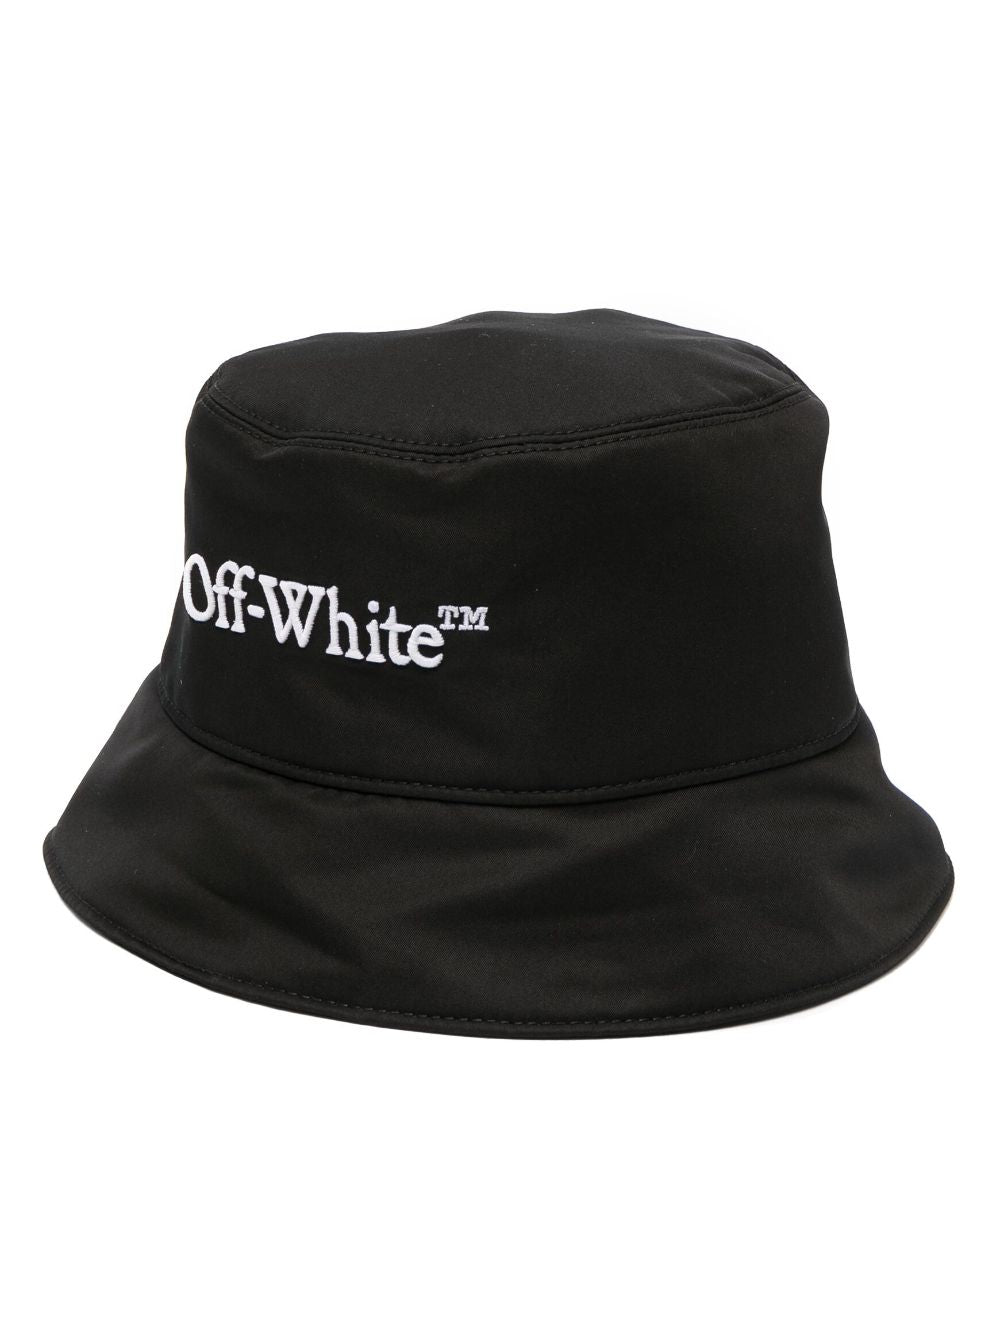 Off White Hat Black